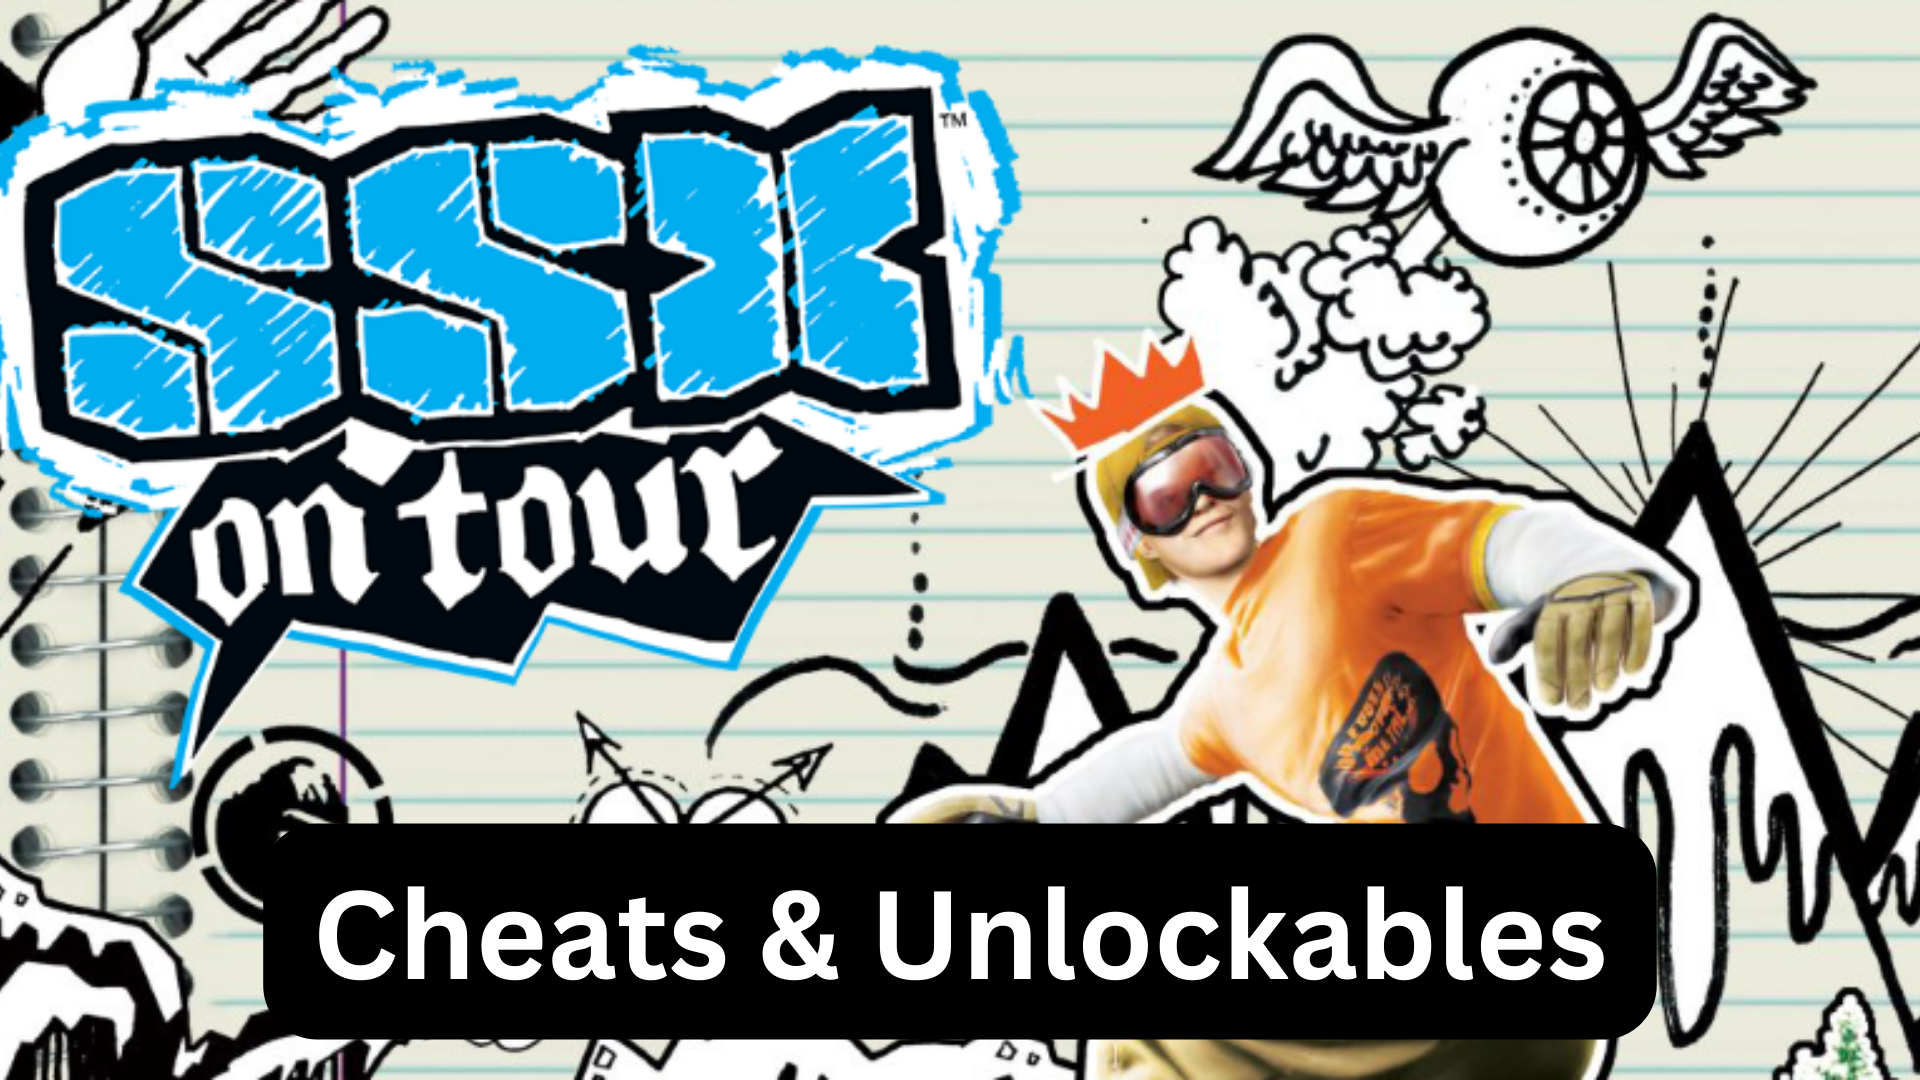 ssx on tour cheats